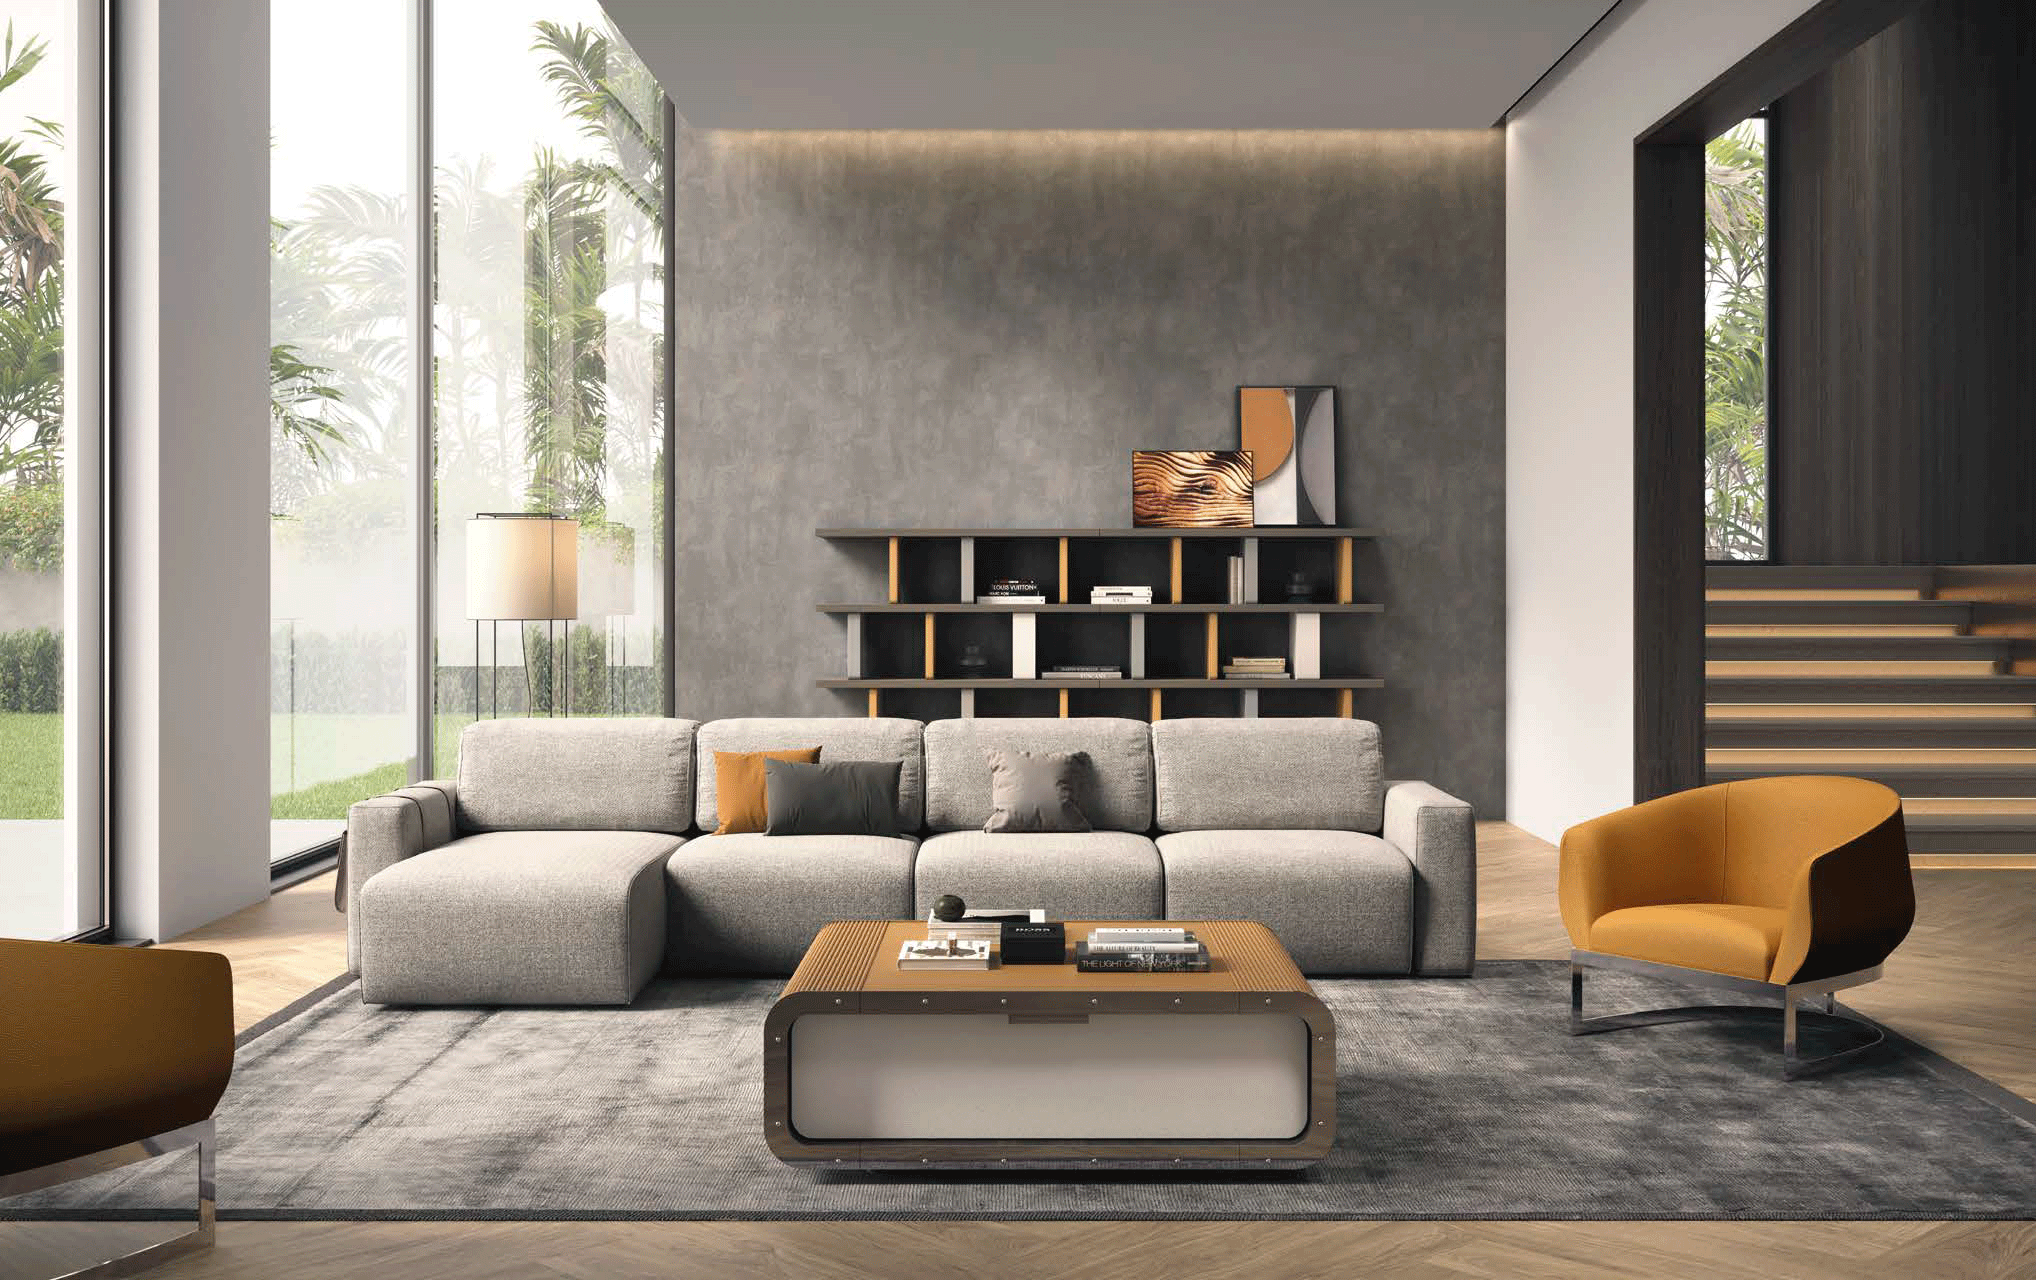 Brands Alexandra Forward Living rooms Cosmopol Living room